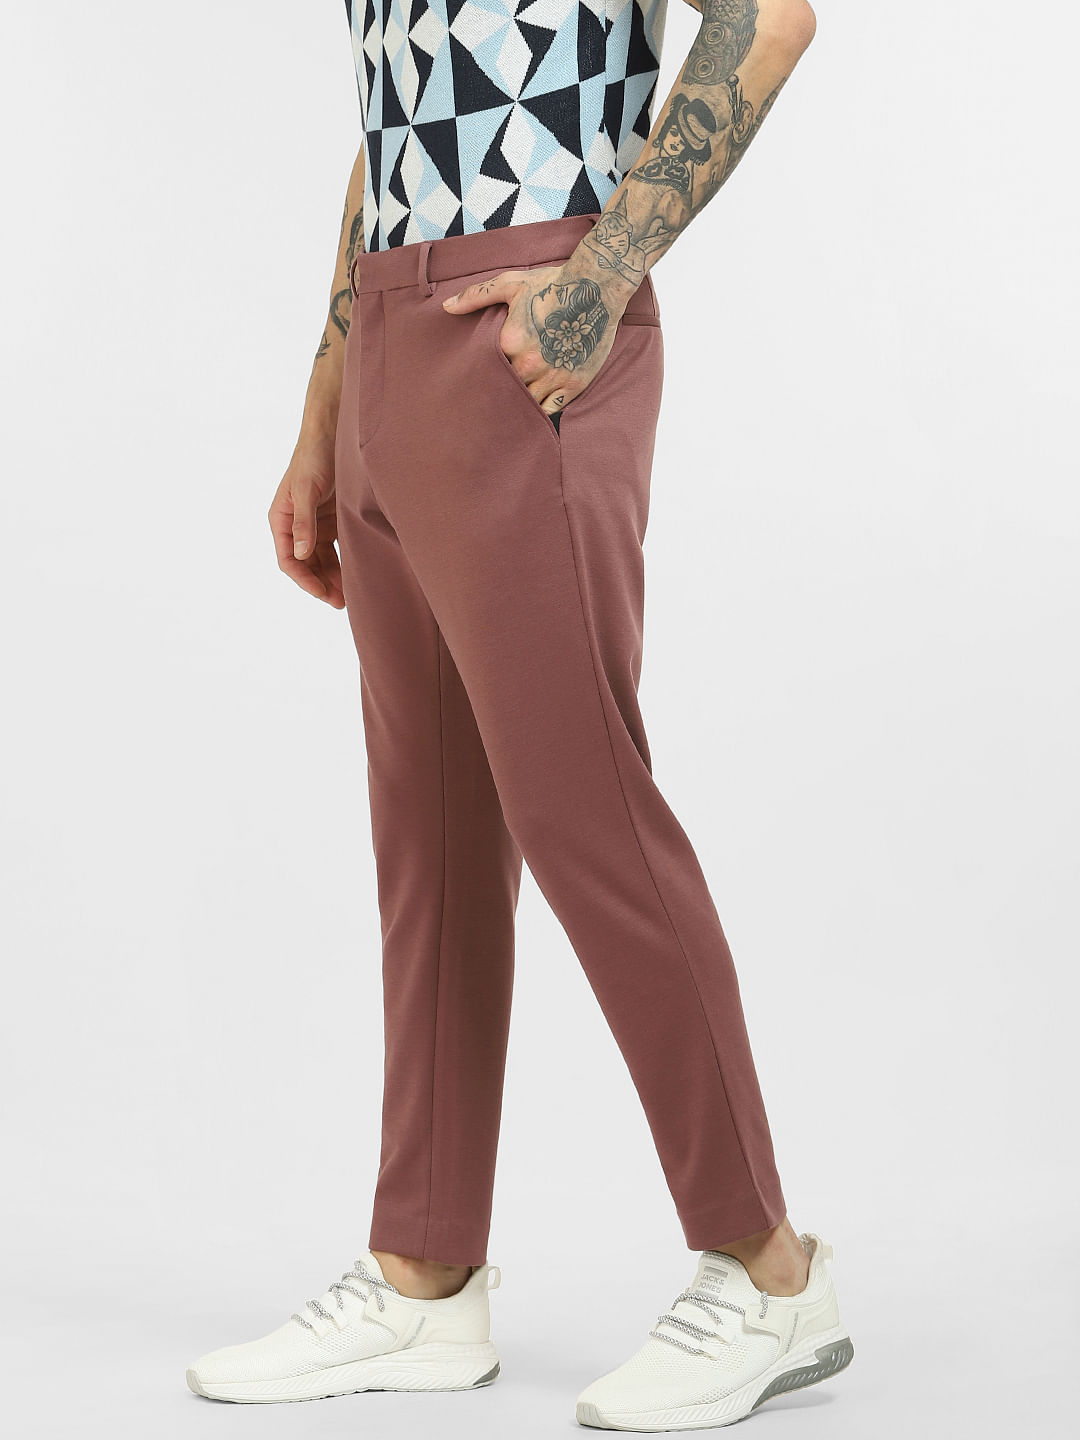 Buy Brown Trousers  Pants for Men by PINE REPUBLIC Online  Ajiocom